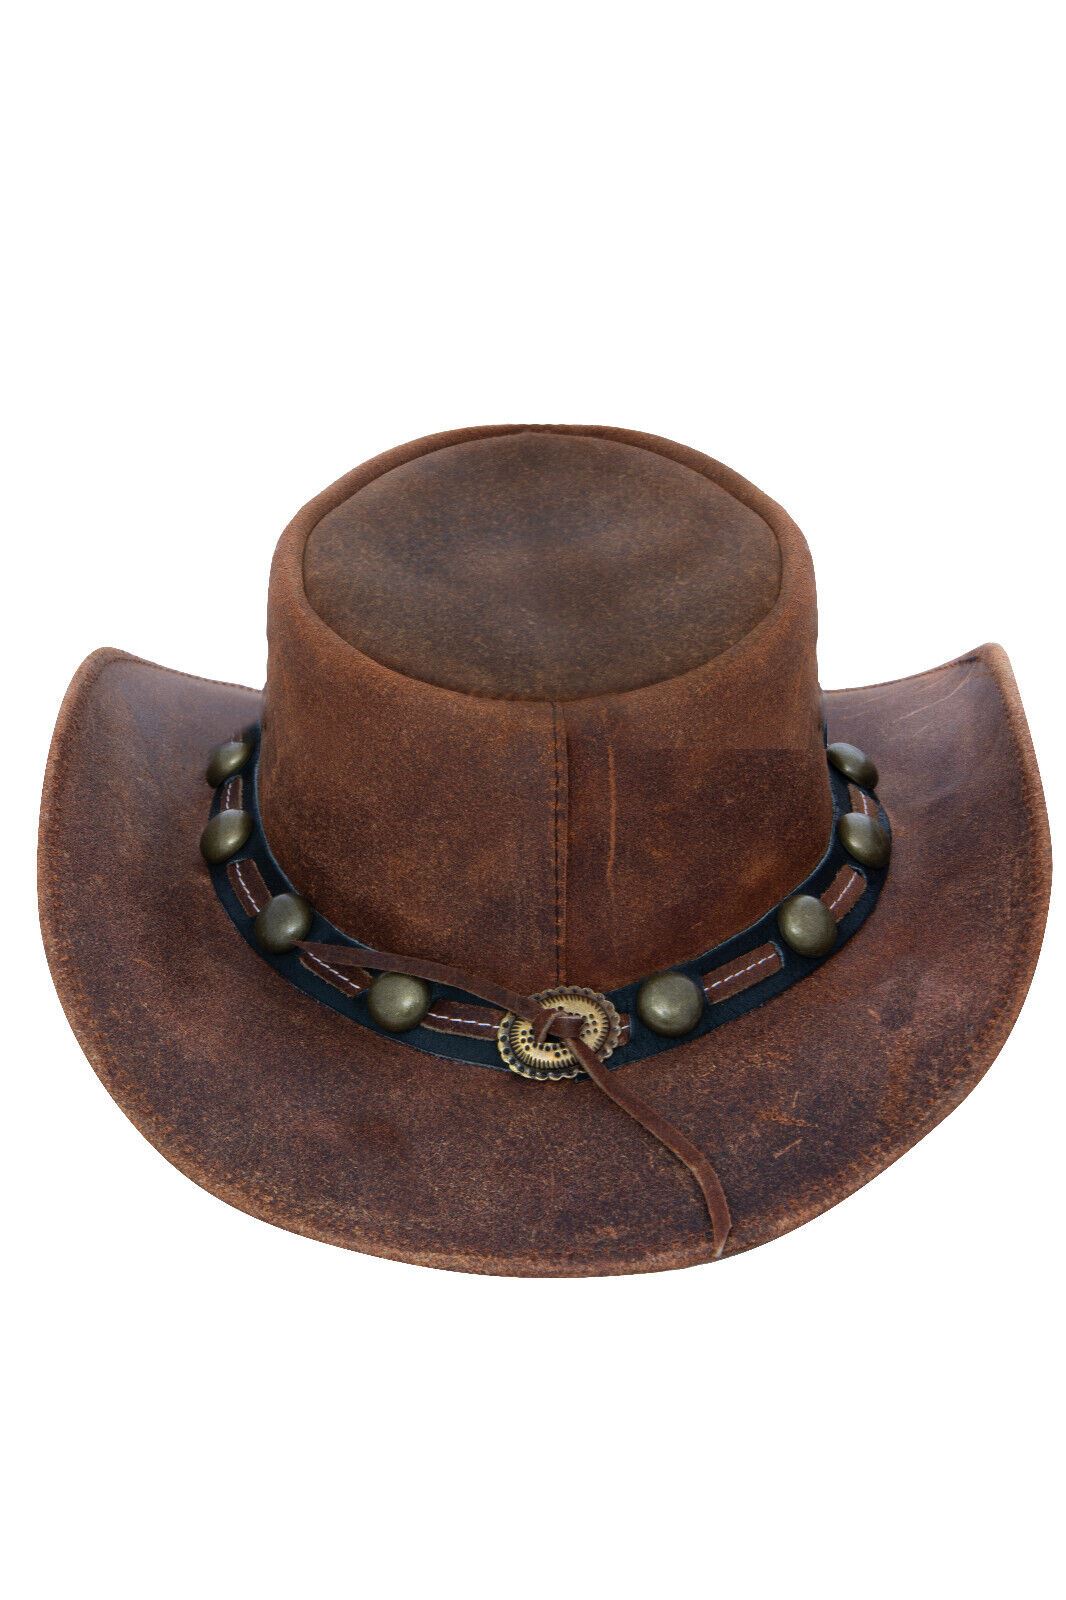 Cowboy Aussie Real Leather Hat Australian Tan Brown Western Outback Bush Hat